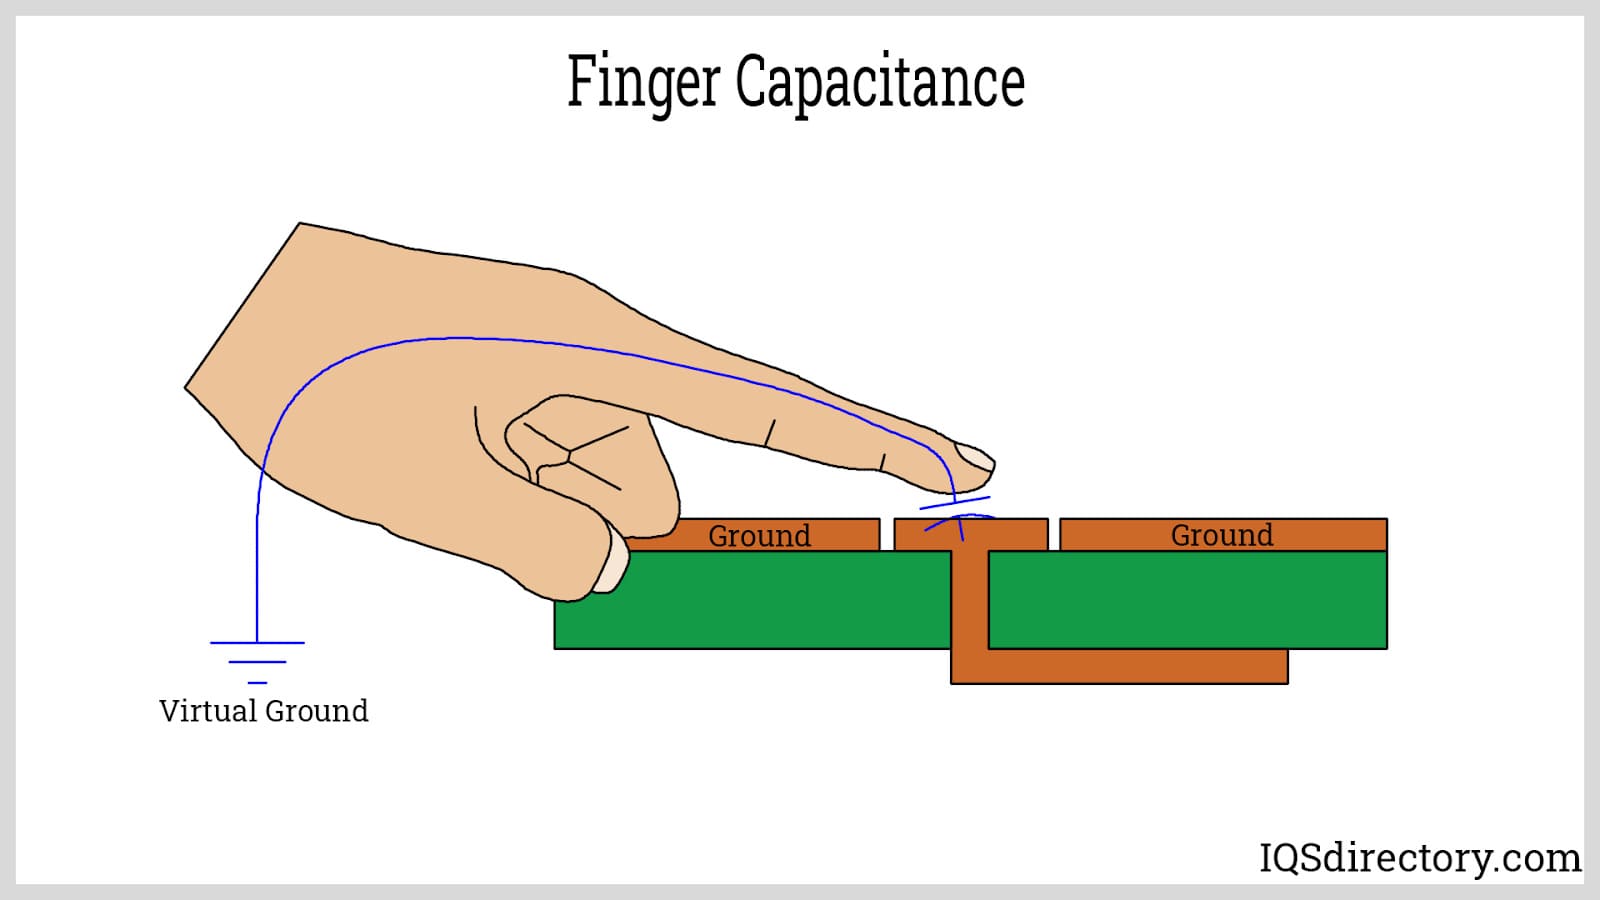 Finger Capacitance